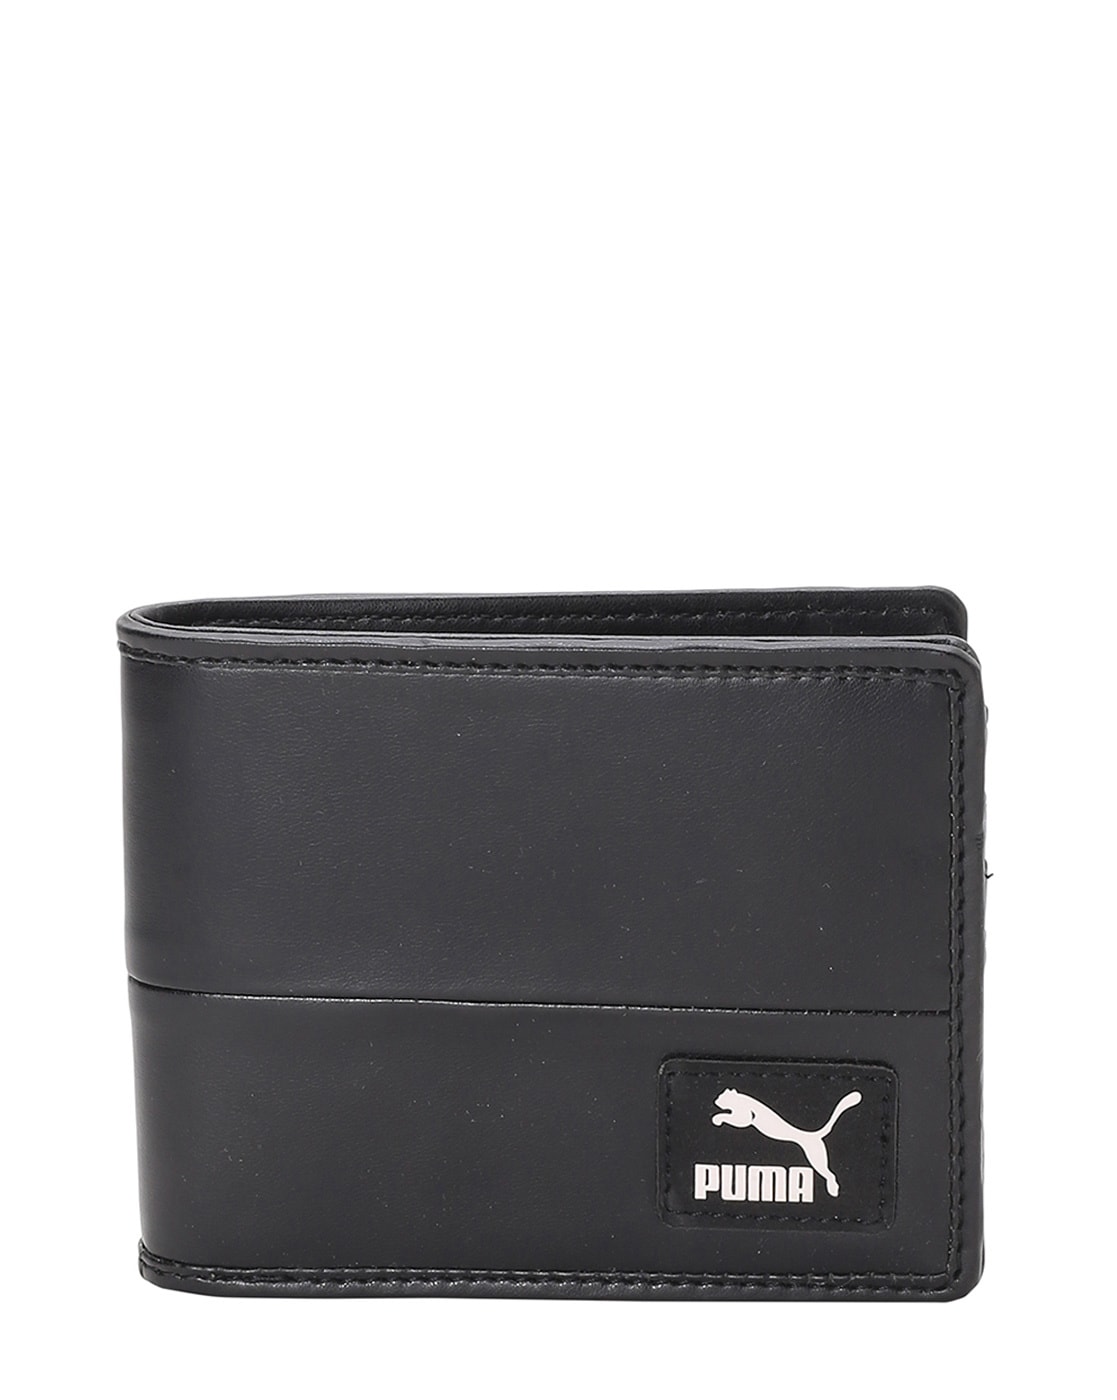 puma men black genuine leather wallet